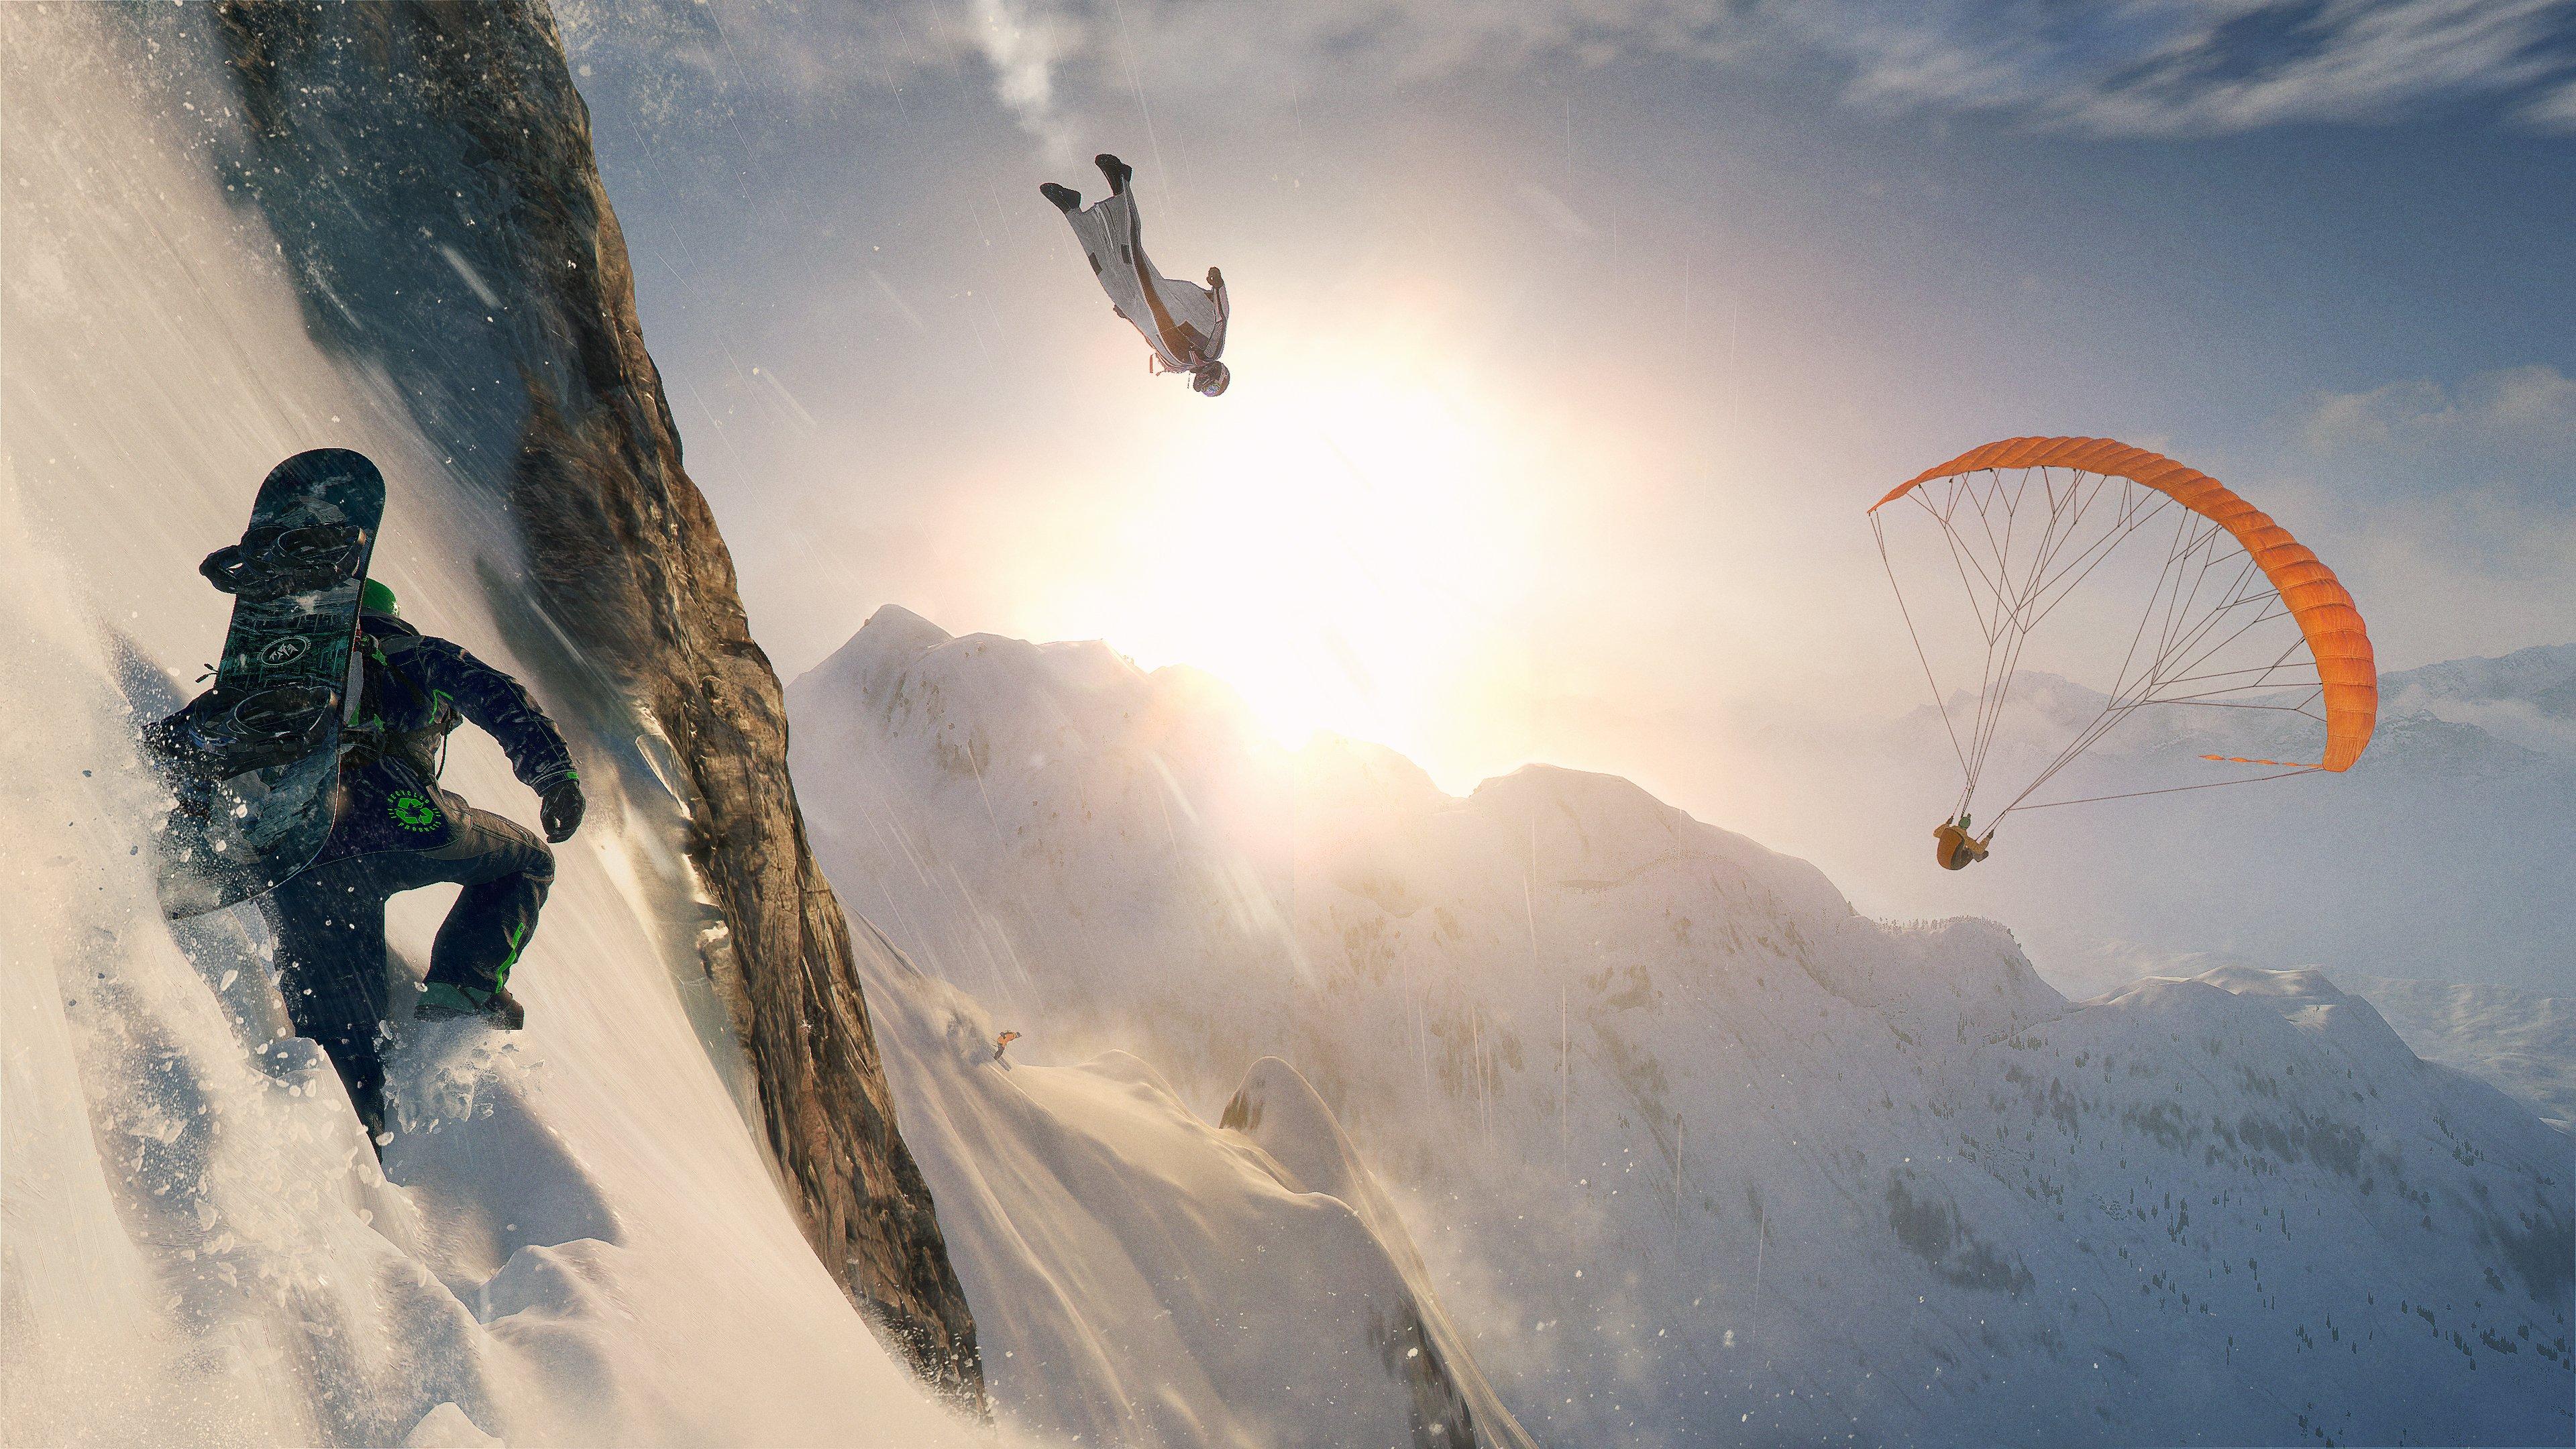 Steep PS4 Beta Impressions: A Winter Sports Wonderland 